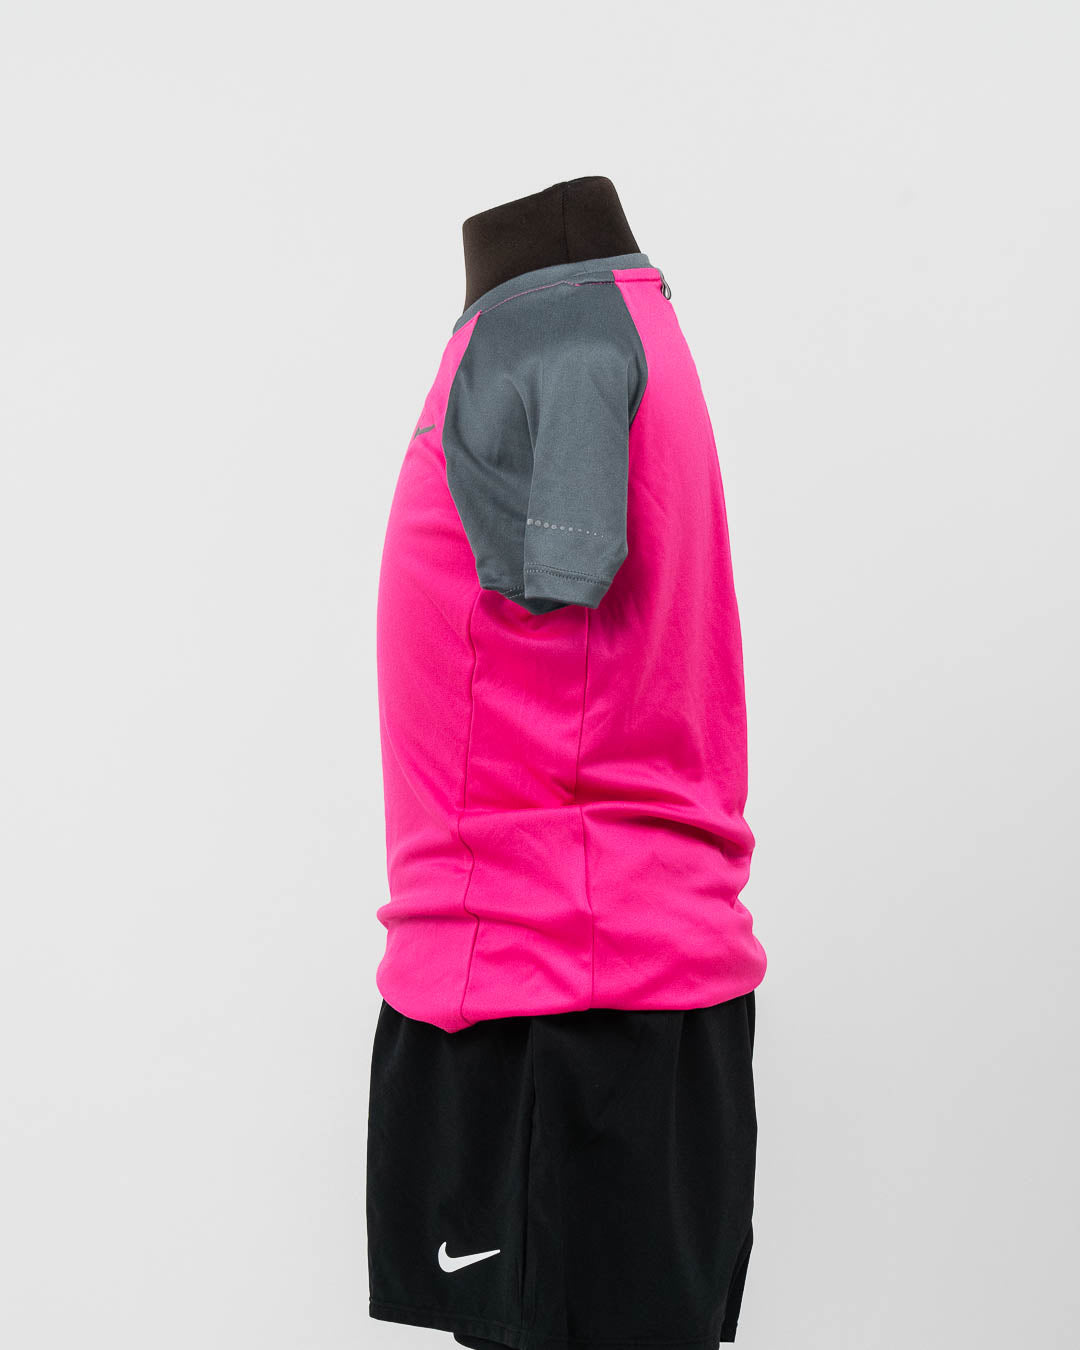 Nike Miler Crew Pige T-shirt Pink/Grå